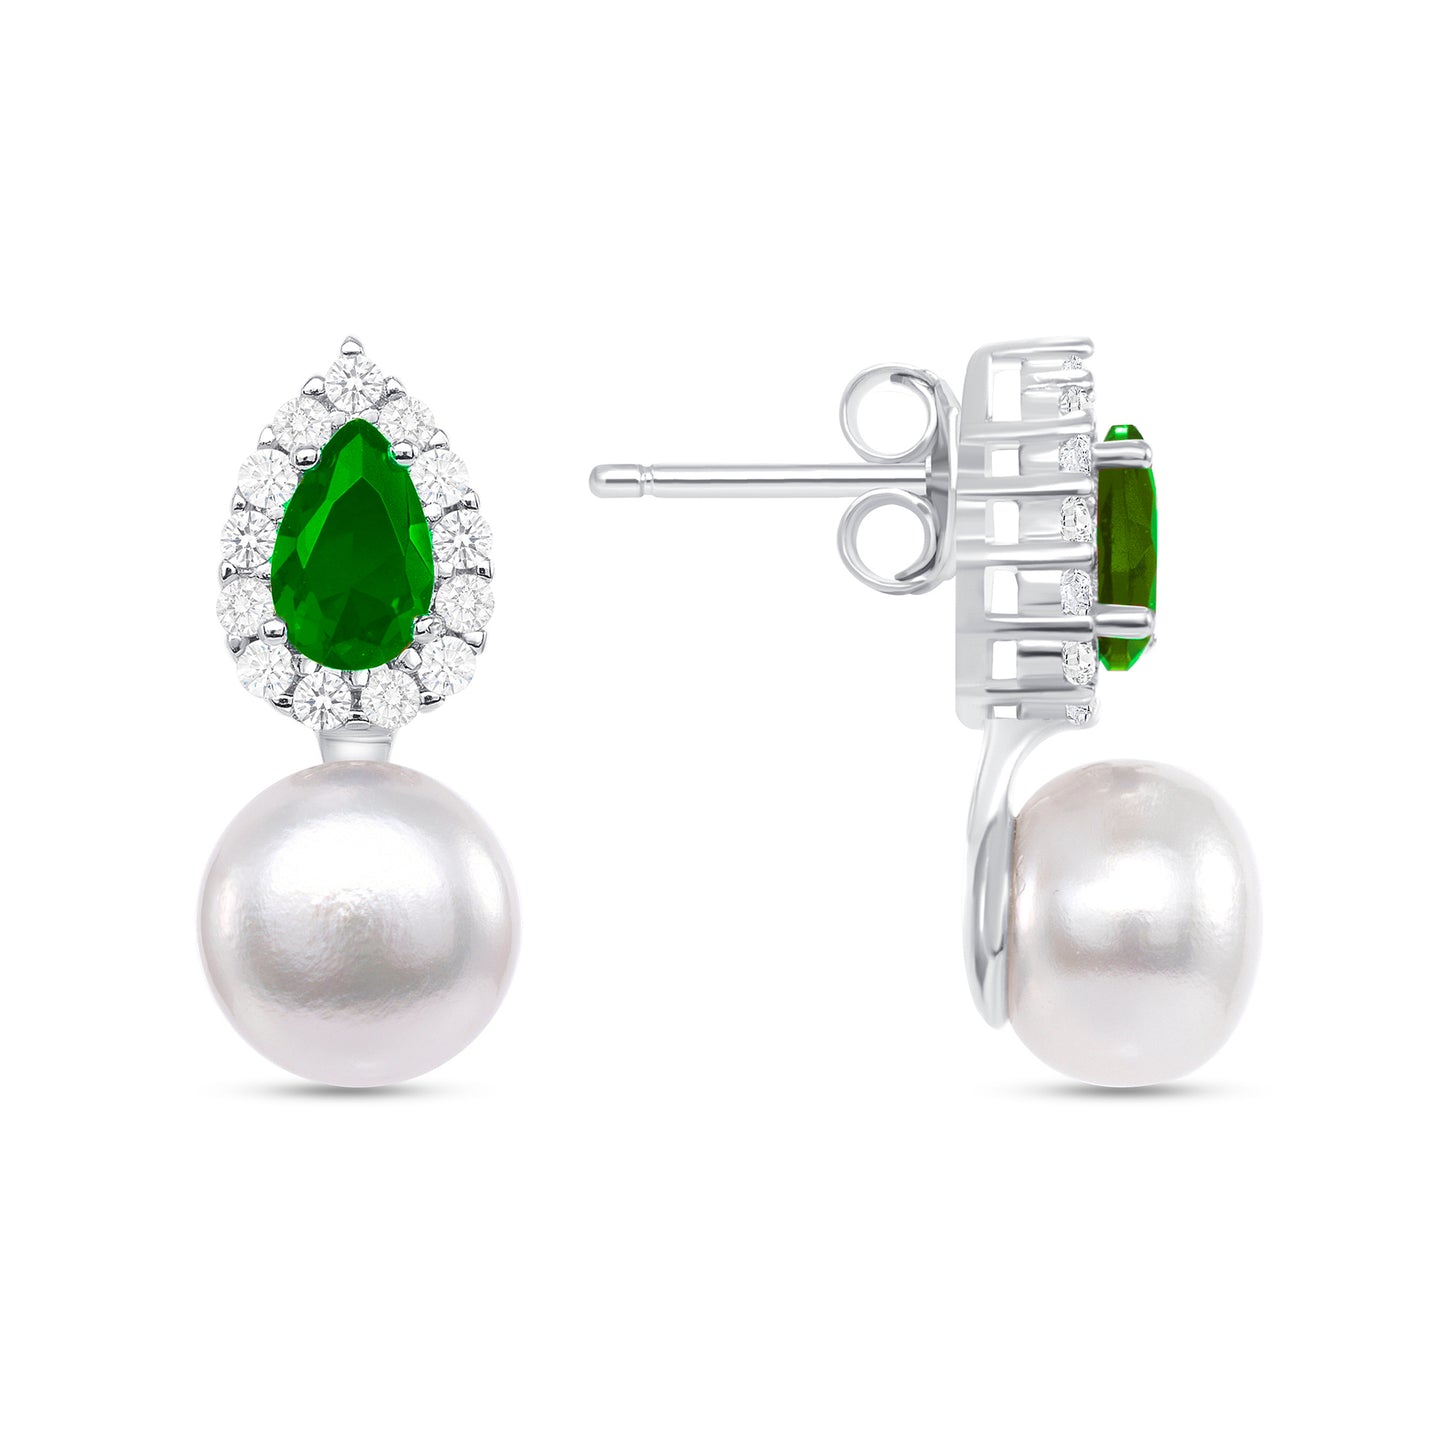 Silver 925 Rhodium Plated Pear Shape Green Cubic Zirconia w/ White Pearl Earrings. GE4313GRN